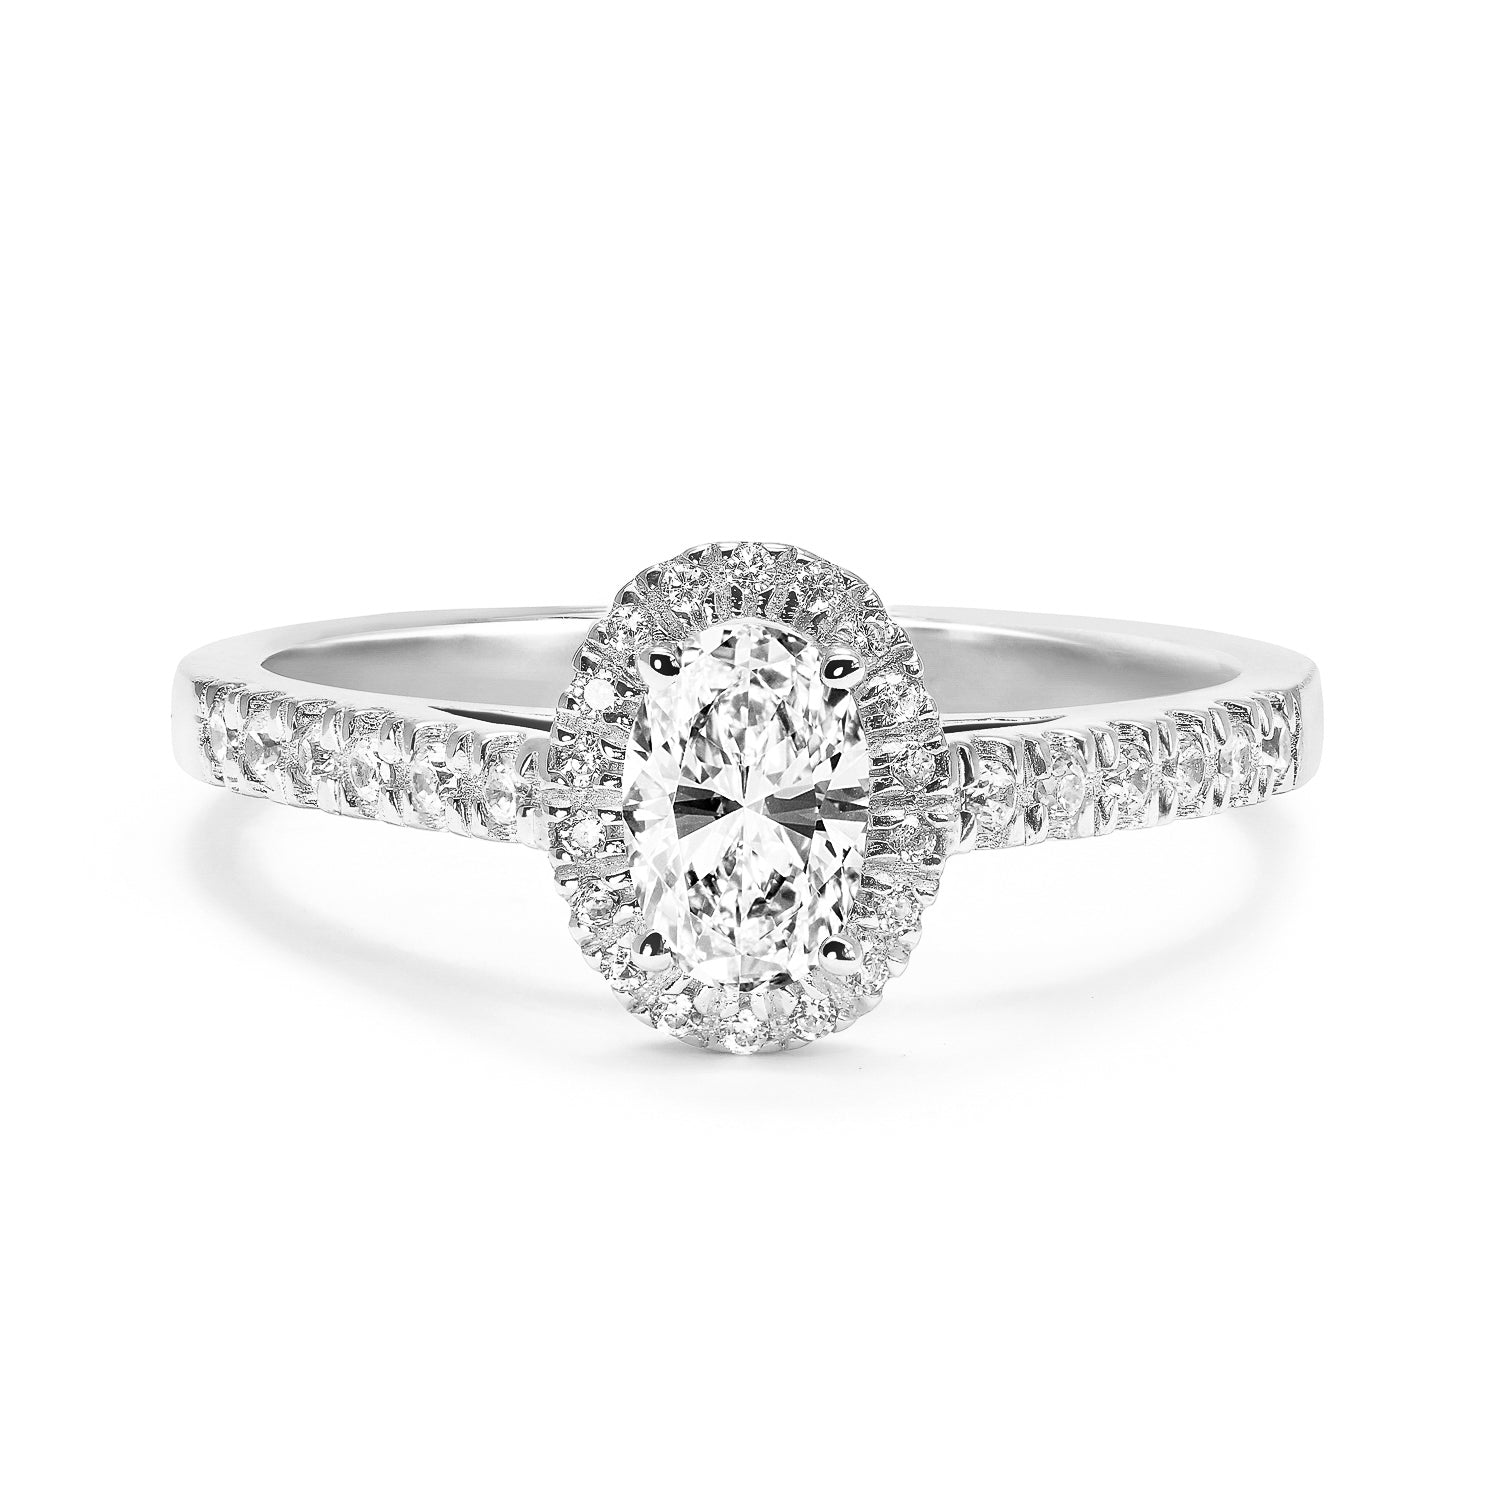 Lyra Ethical Diamond Engagement Ring, Platinum